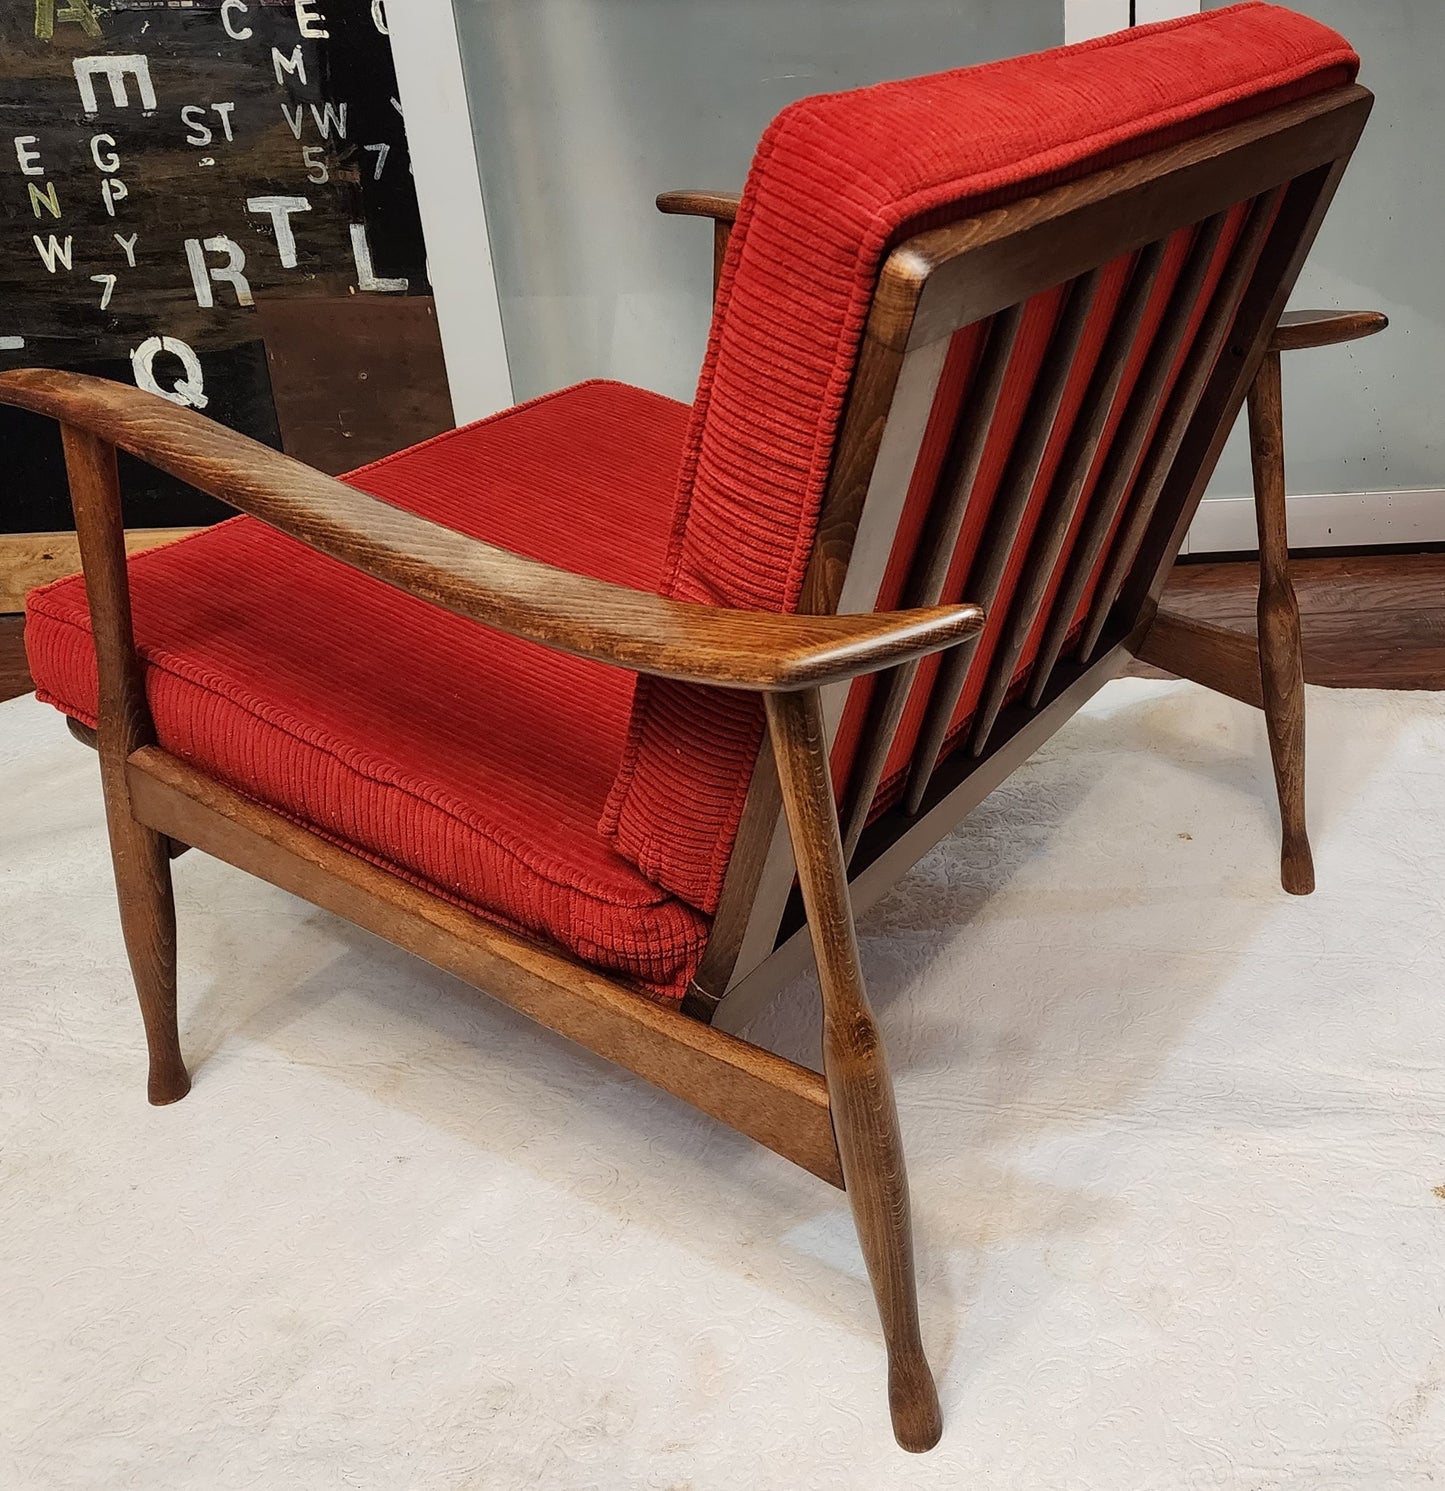 REFINISHED Danish Mid-Century Modern Lounge Chair